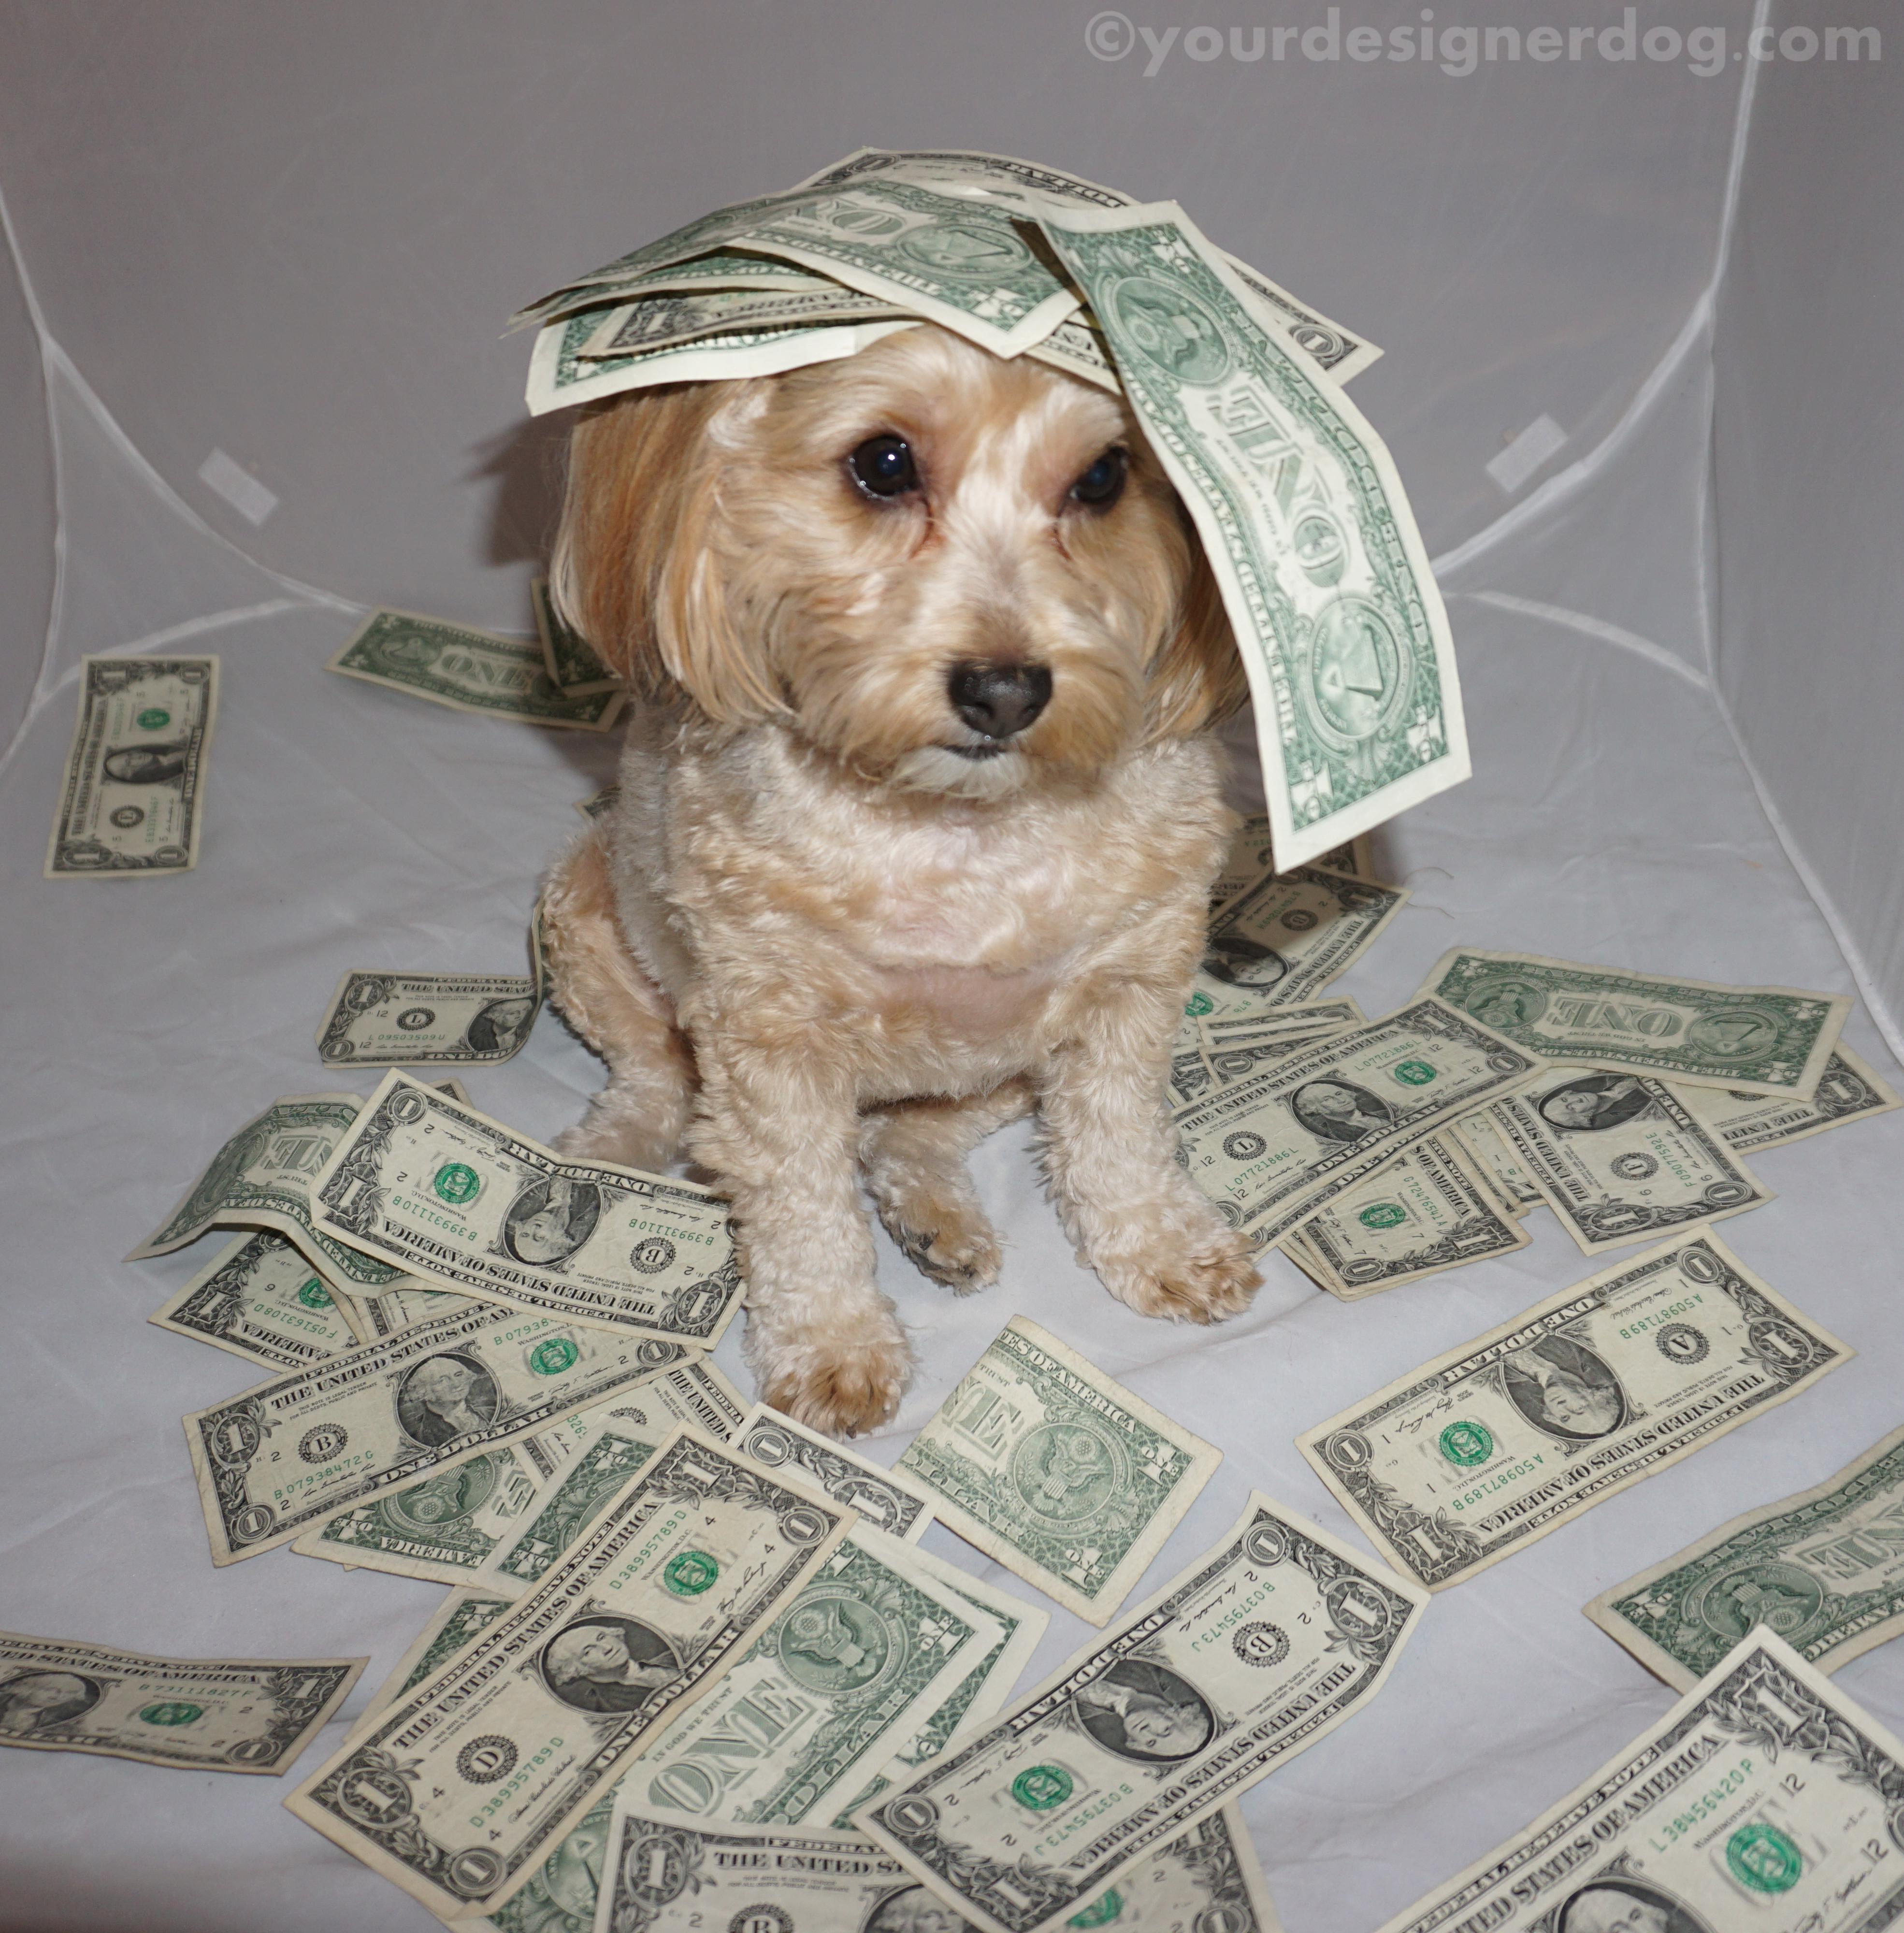 dogs, designer dogs, yorkipoo, yorkie poo, money, green, make it rain